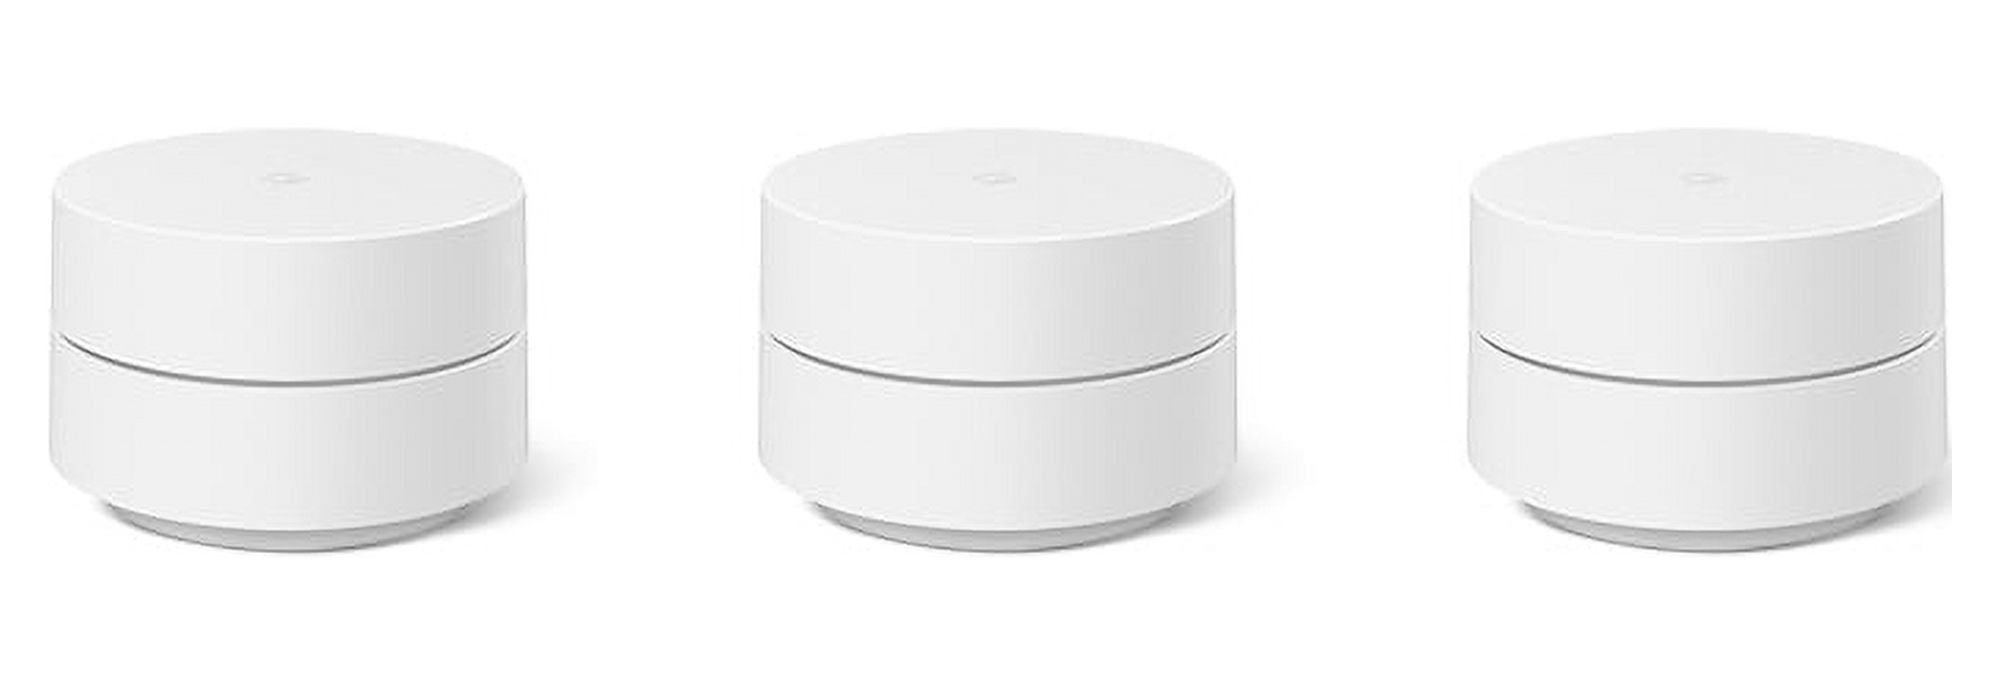 Google Wifi 3pk - Home Wi-Fi System - Mesh Wi-Fi - Whole Home Coverage